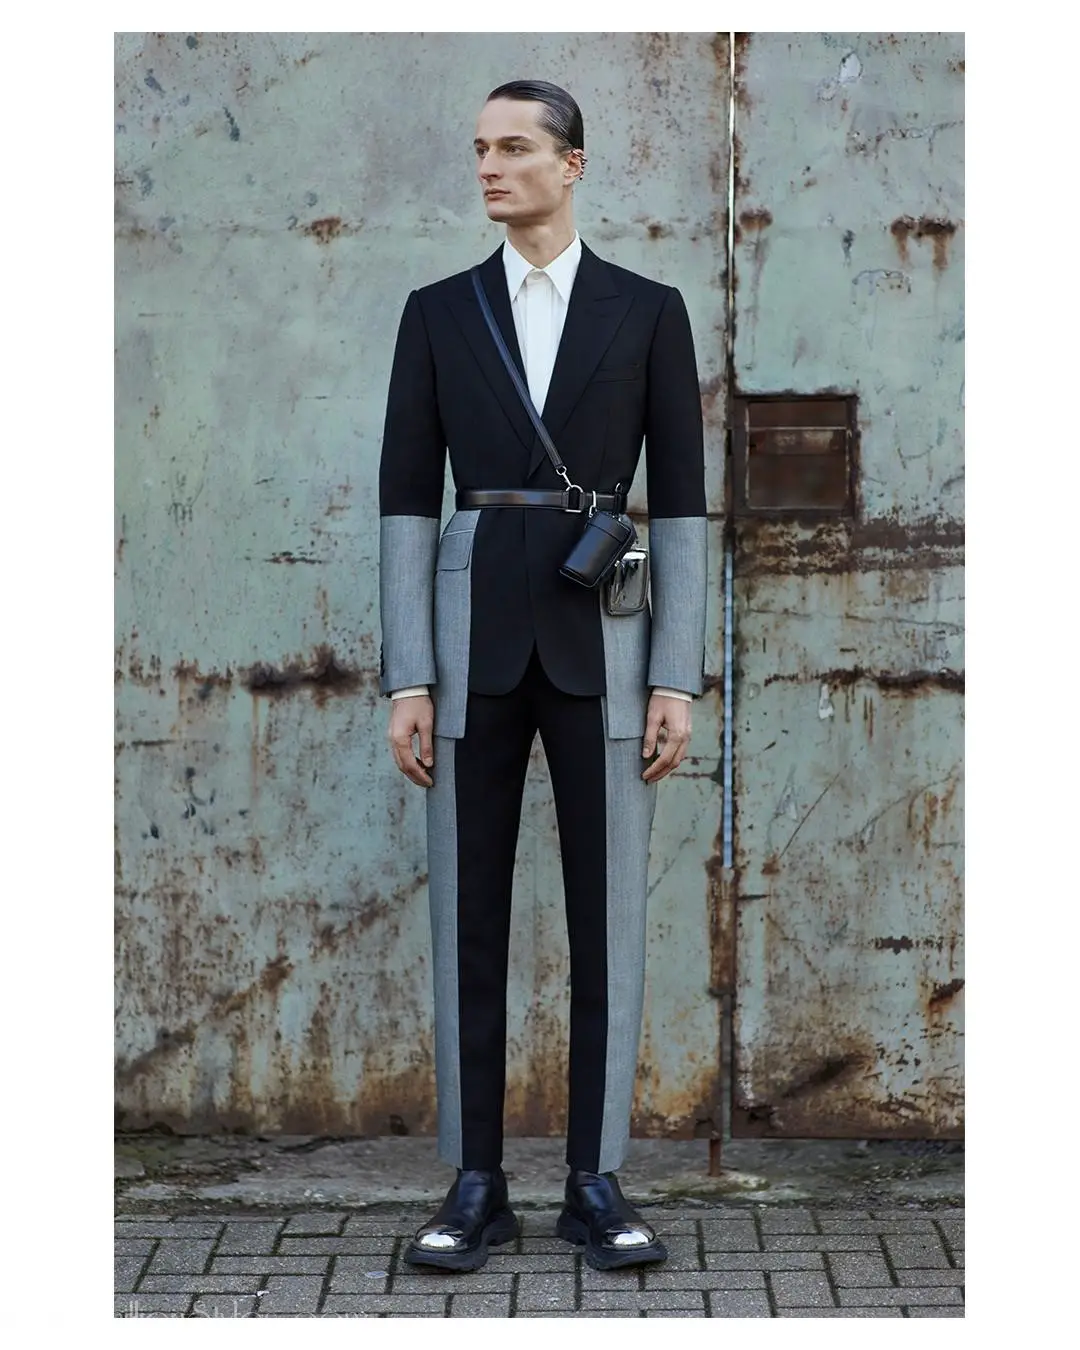 Would You Wear These Alexander McQueen Men's Suit?